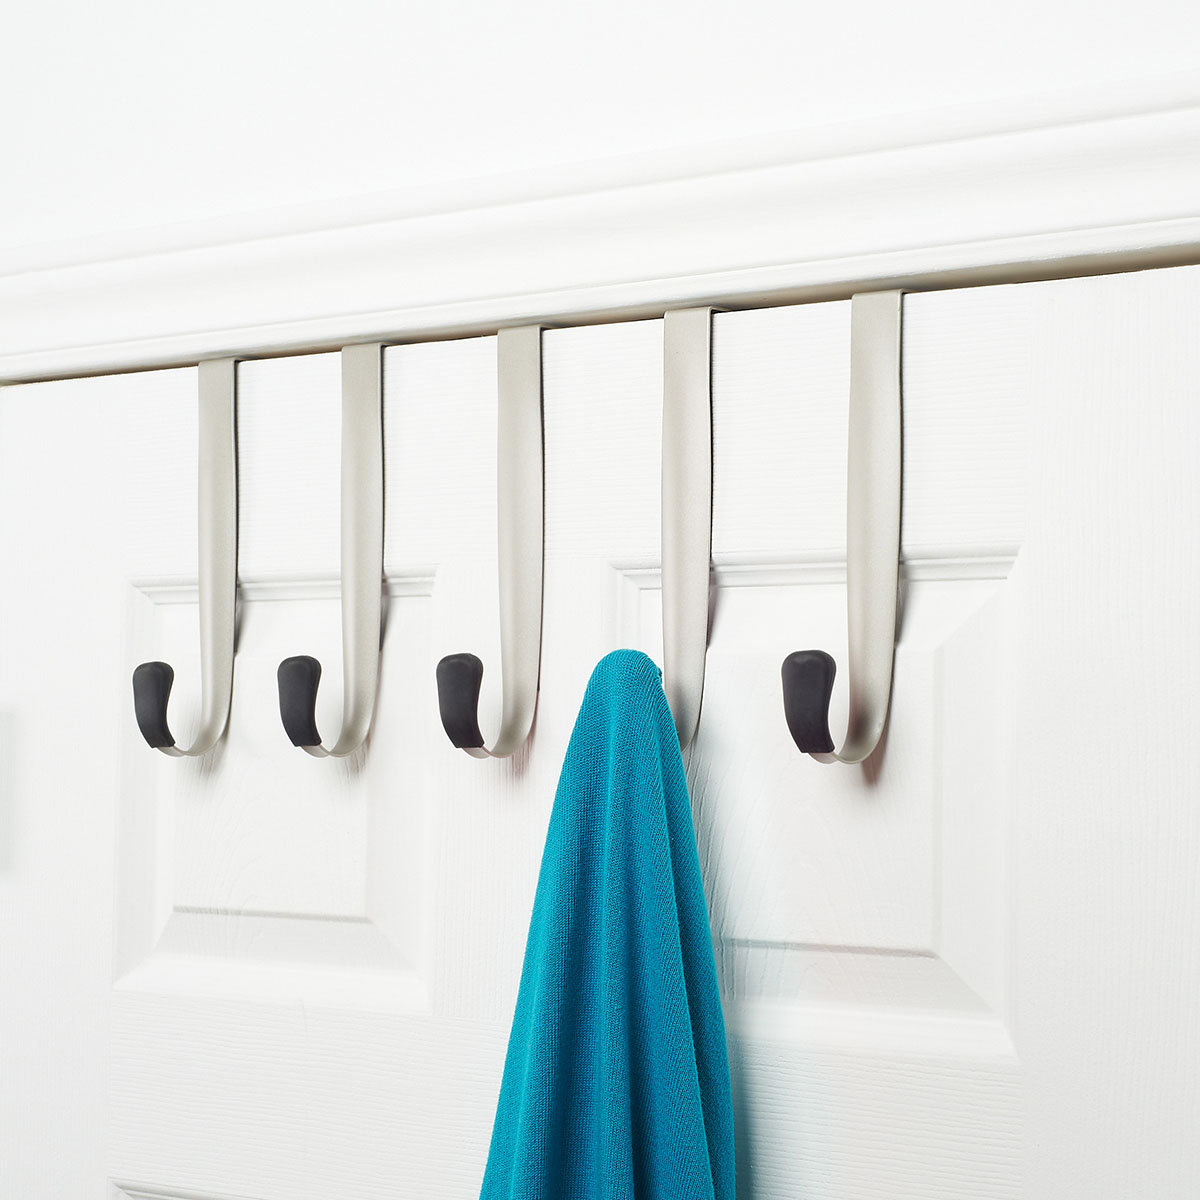 How To Mount A Towel Rack On A Hollow Door